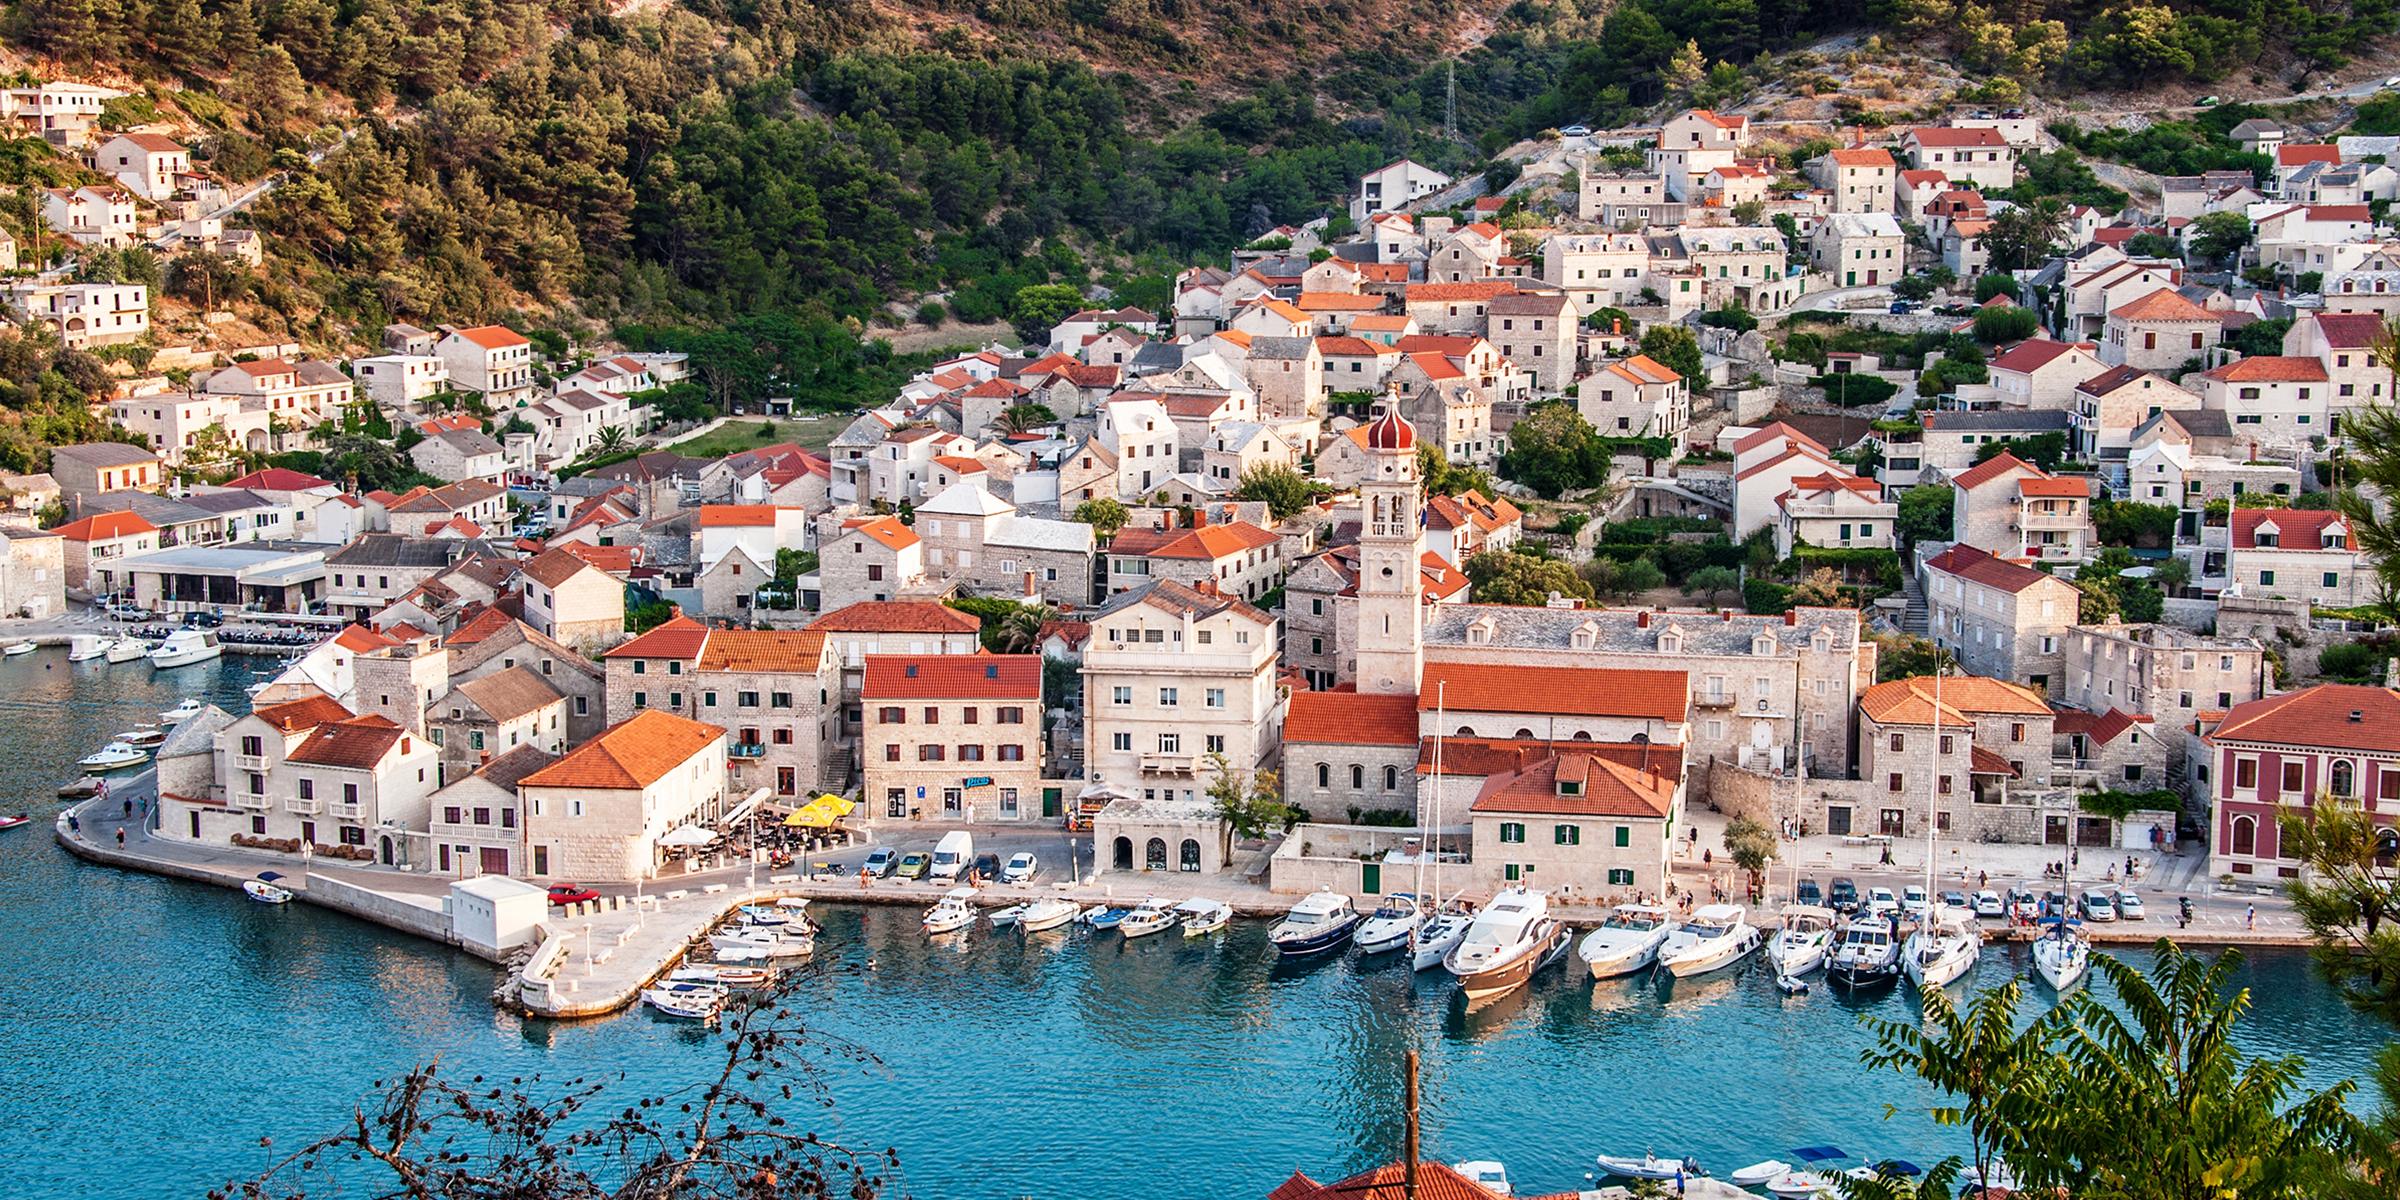 Pučišća Town on the Island of Brac in Croatia